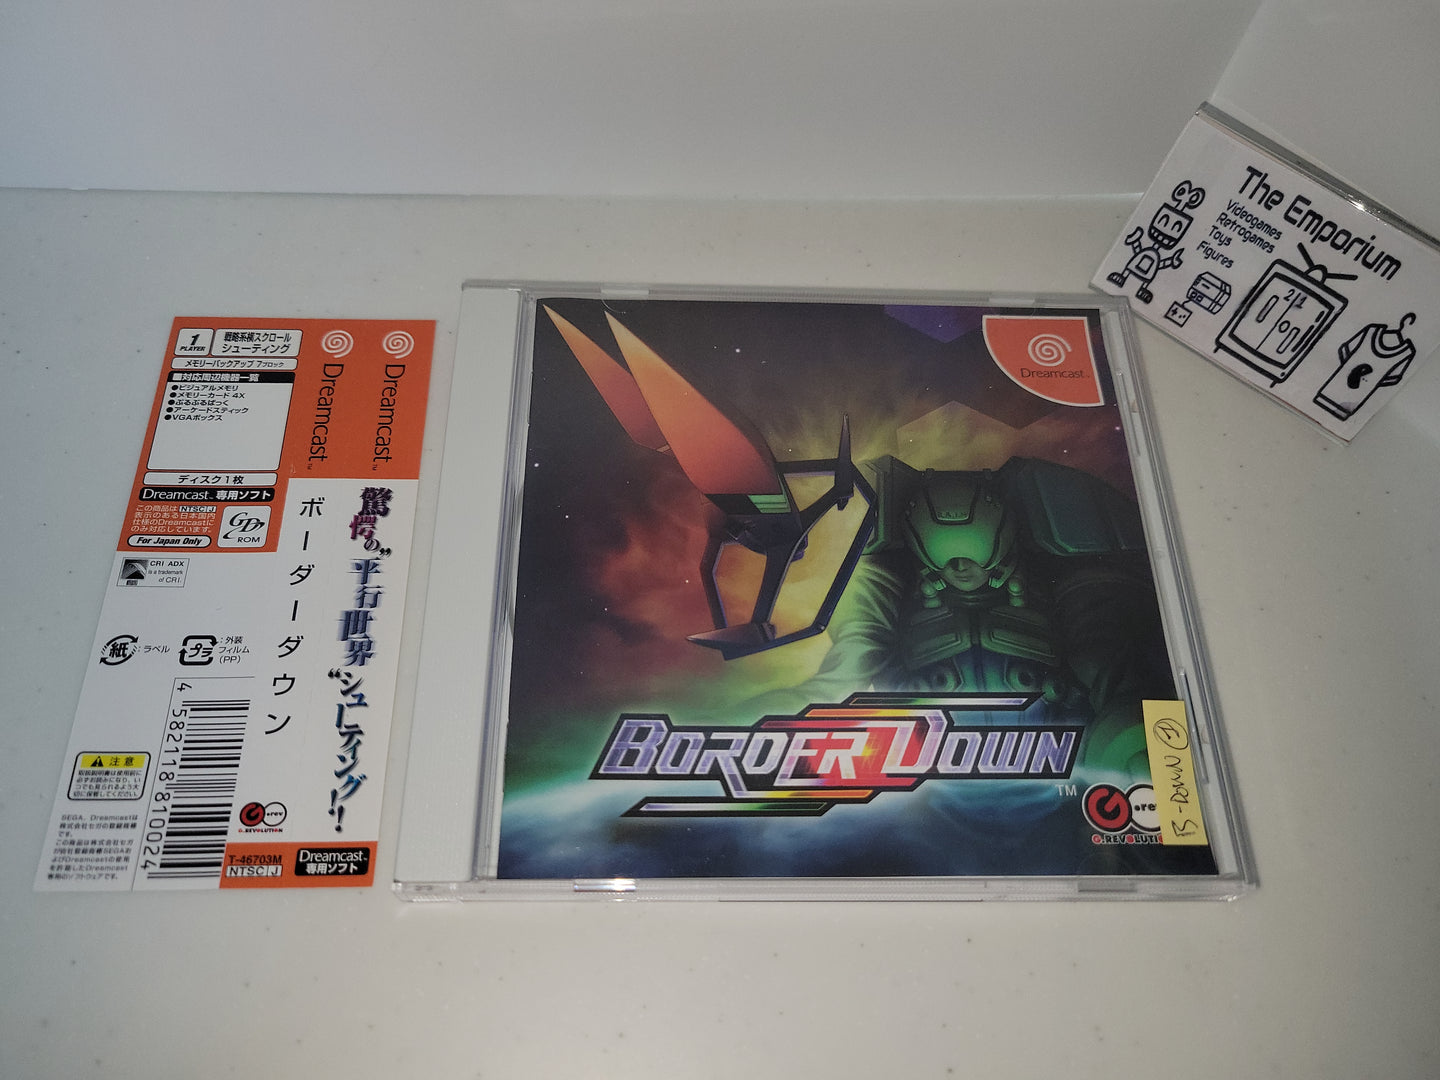 Border Down - Sega dc Dreamcast